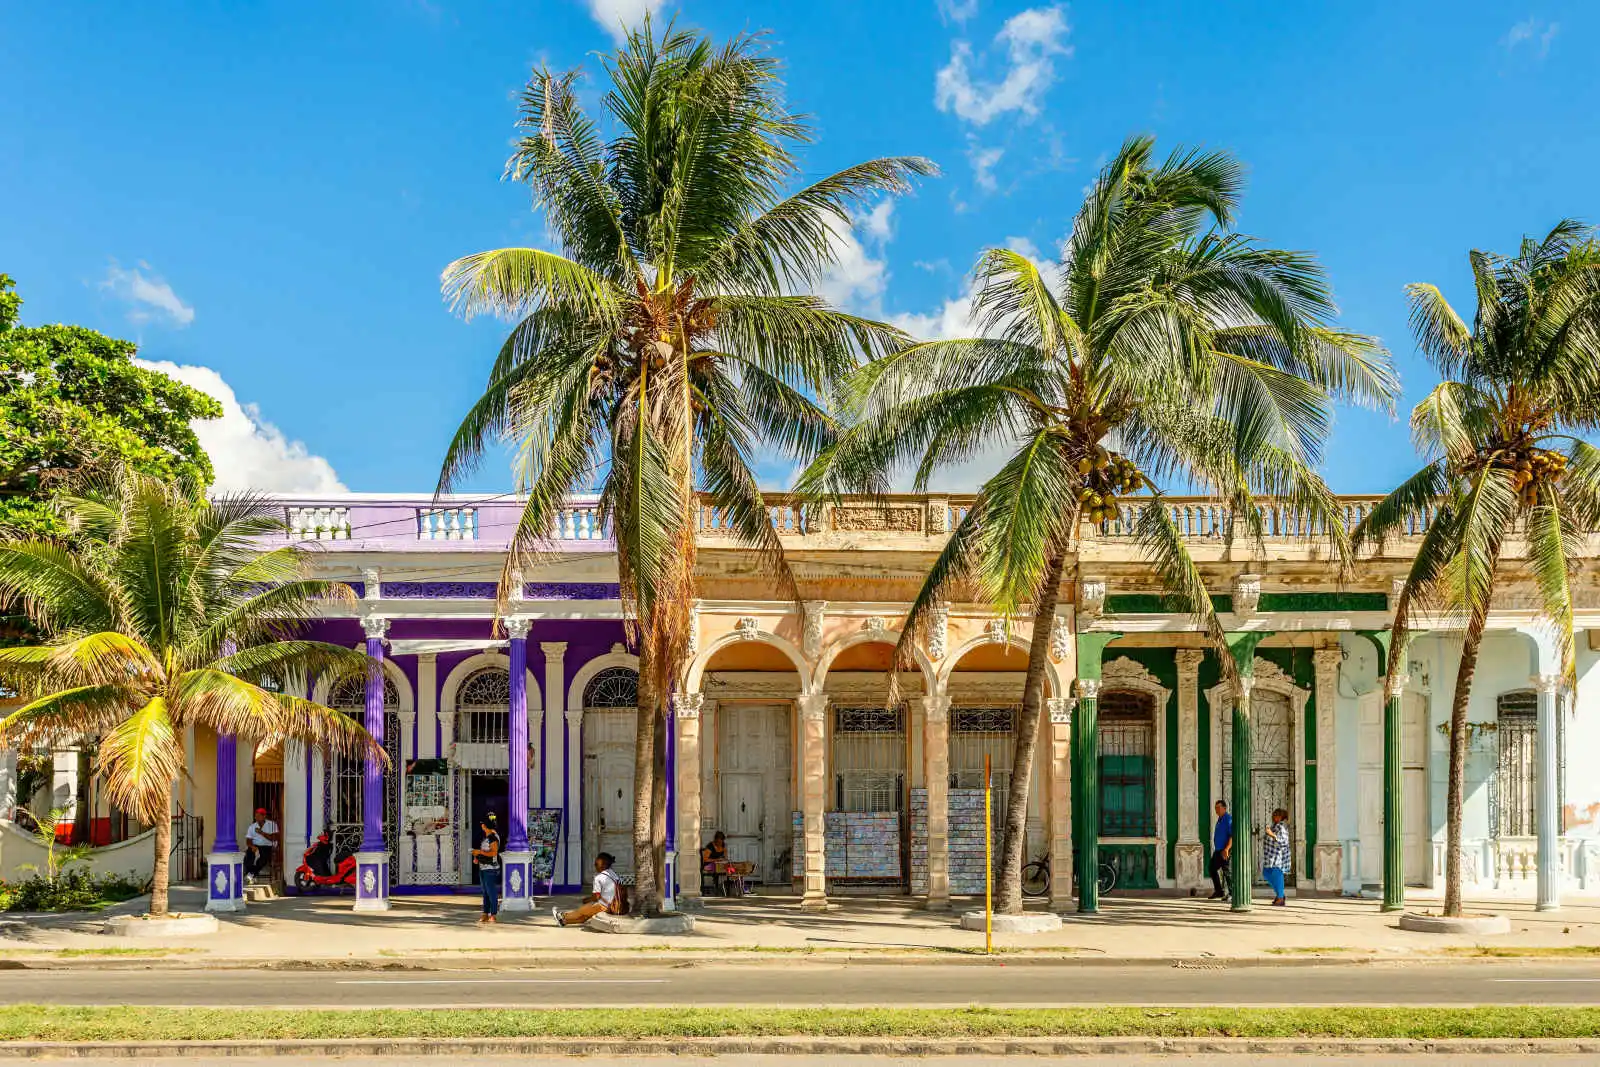 Façades de maisons dans le quartier colonial espagnol, Cienfuegos, Cuba